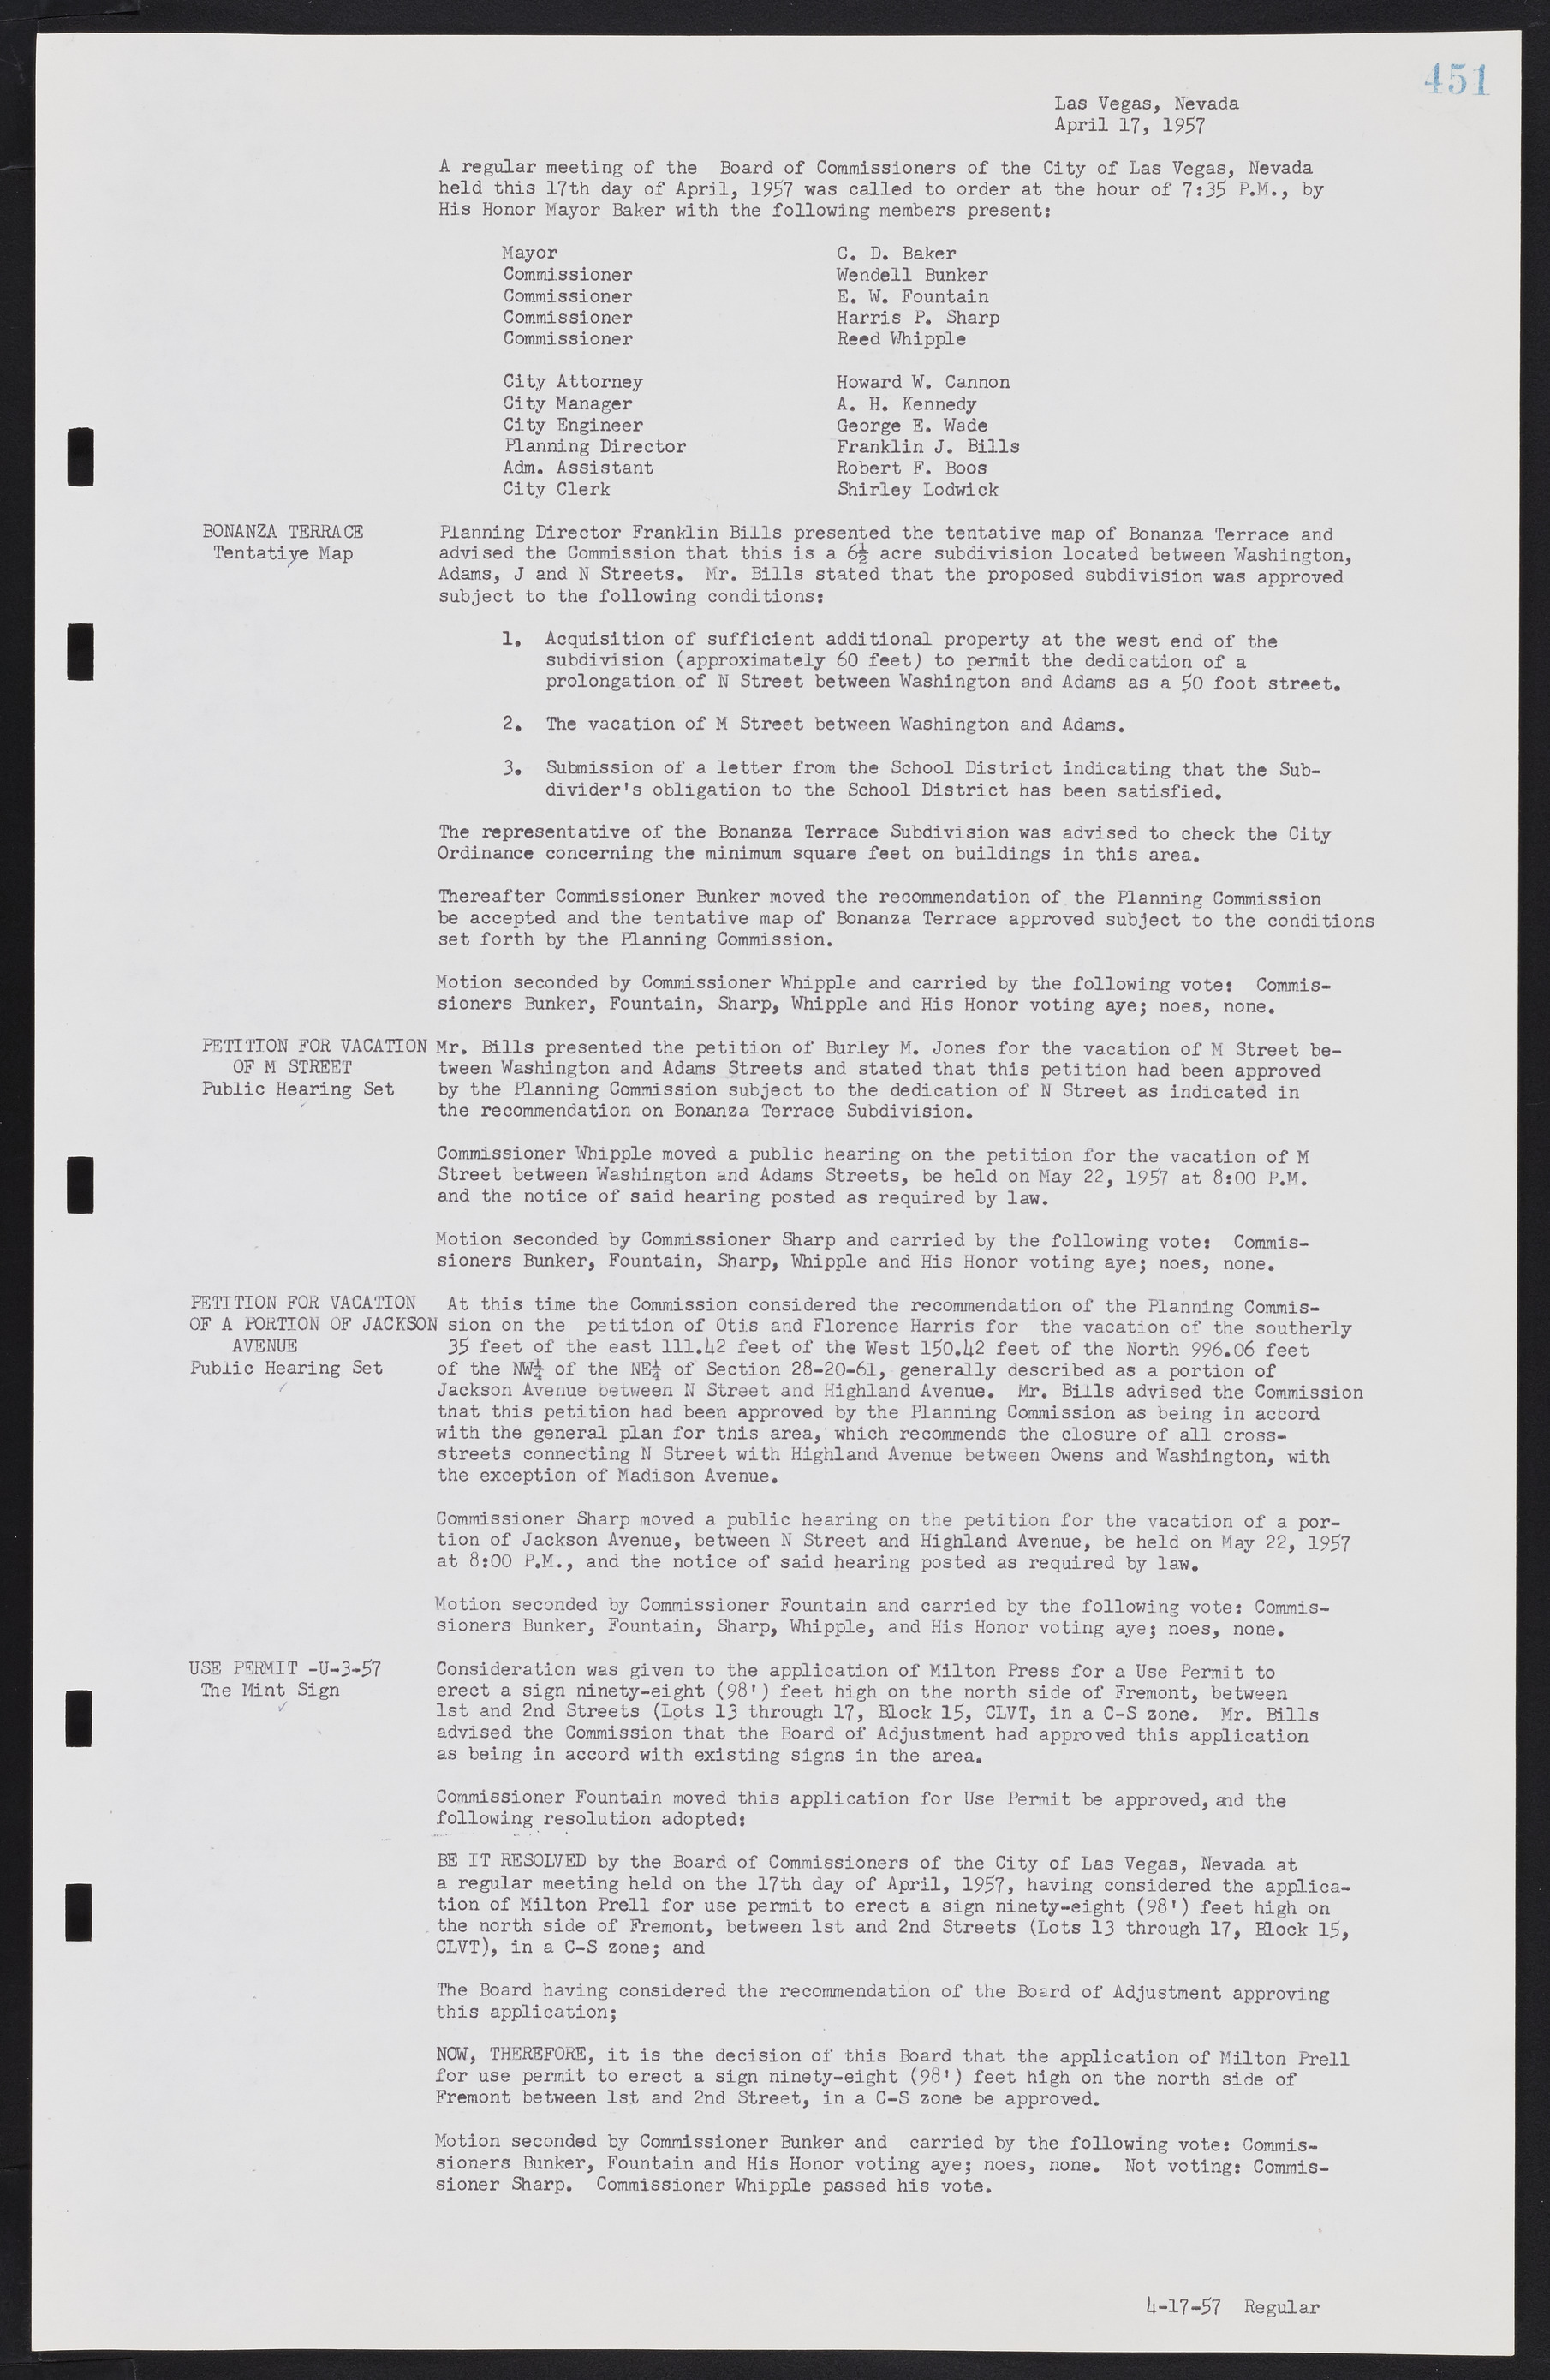 Las Vegas City Commission Minutes, September 21, 1955 to November 20, 1957, lvc000010-471